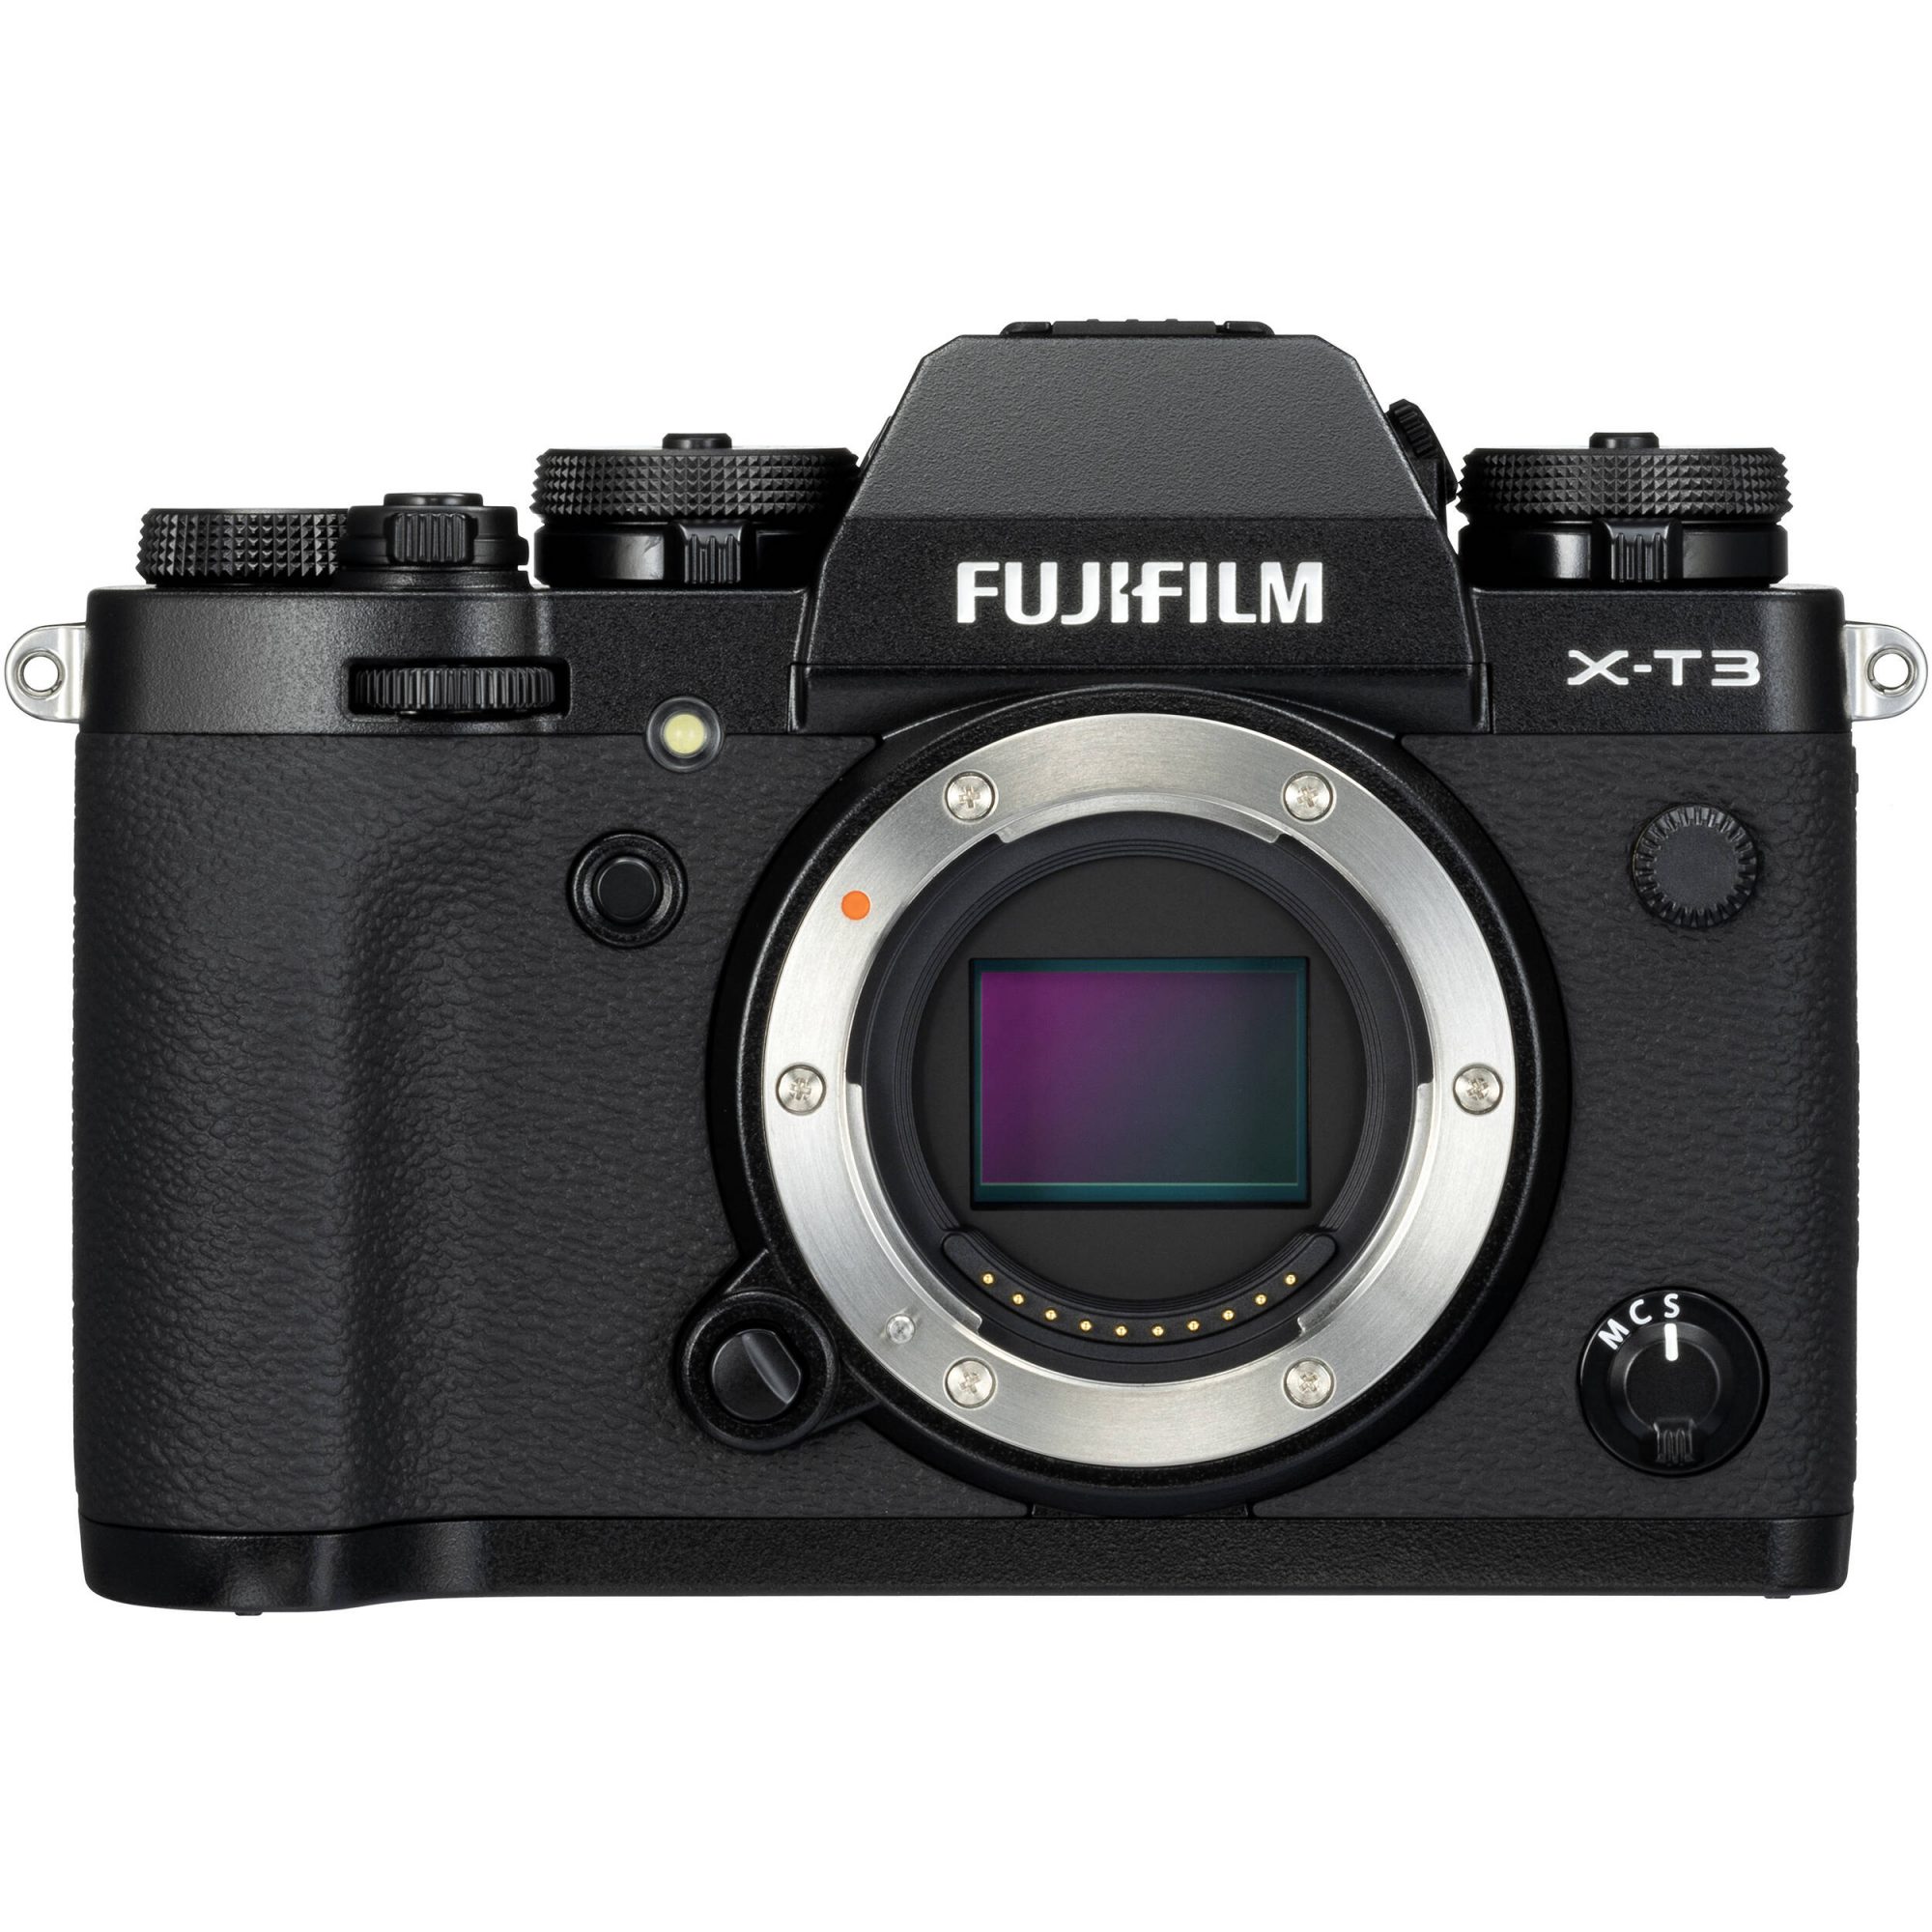 Fujifilm X-T3 camera manual download 